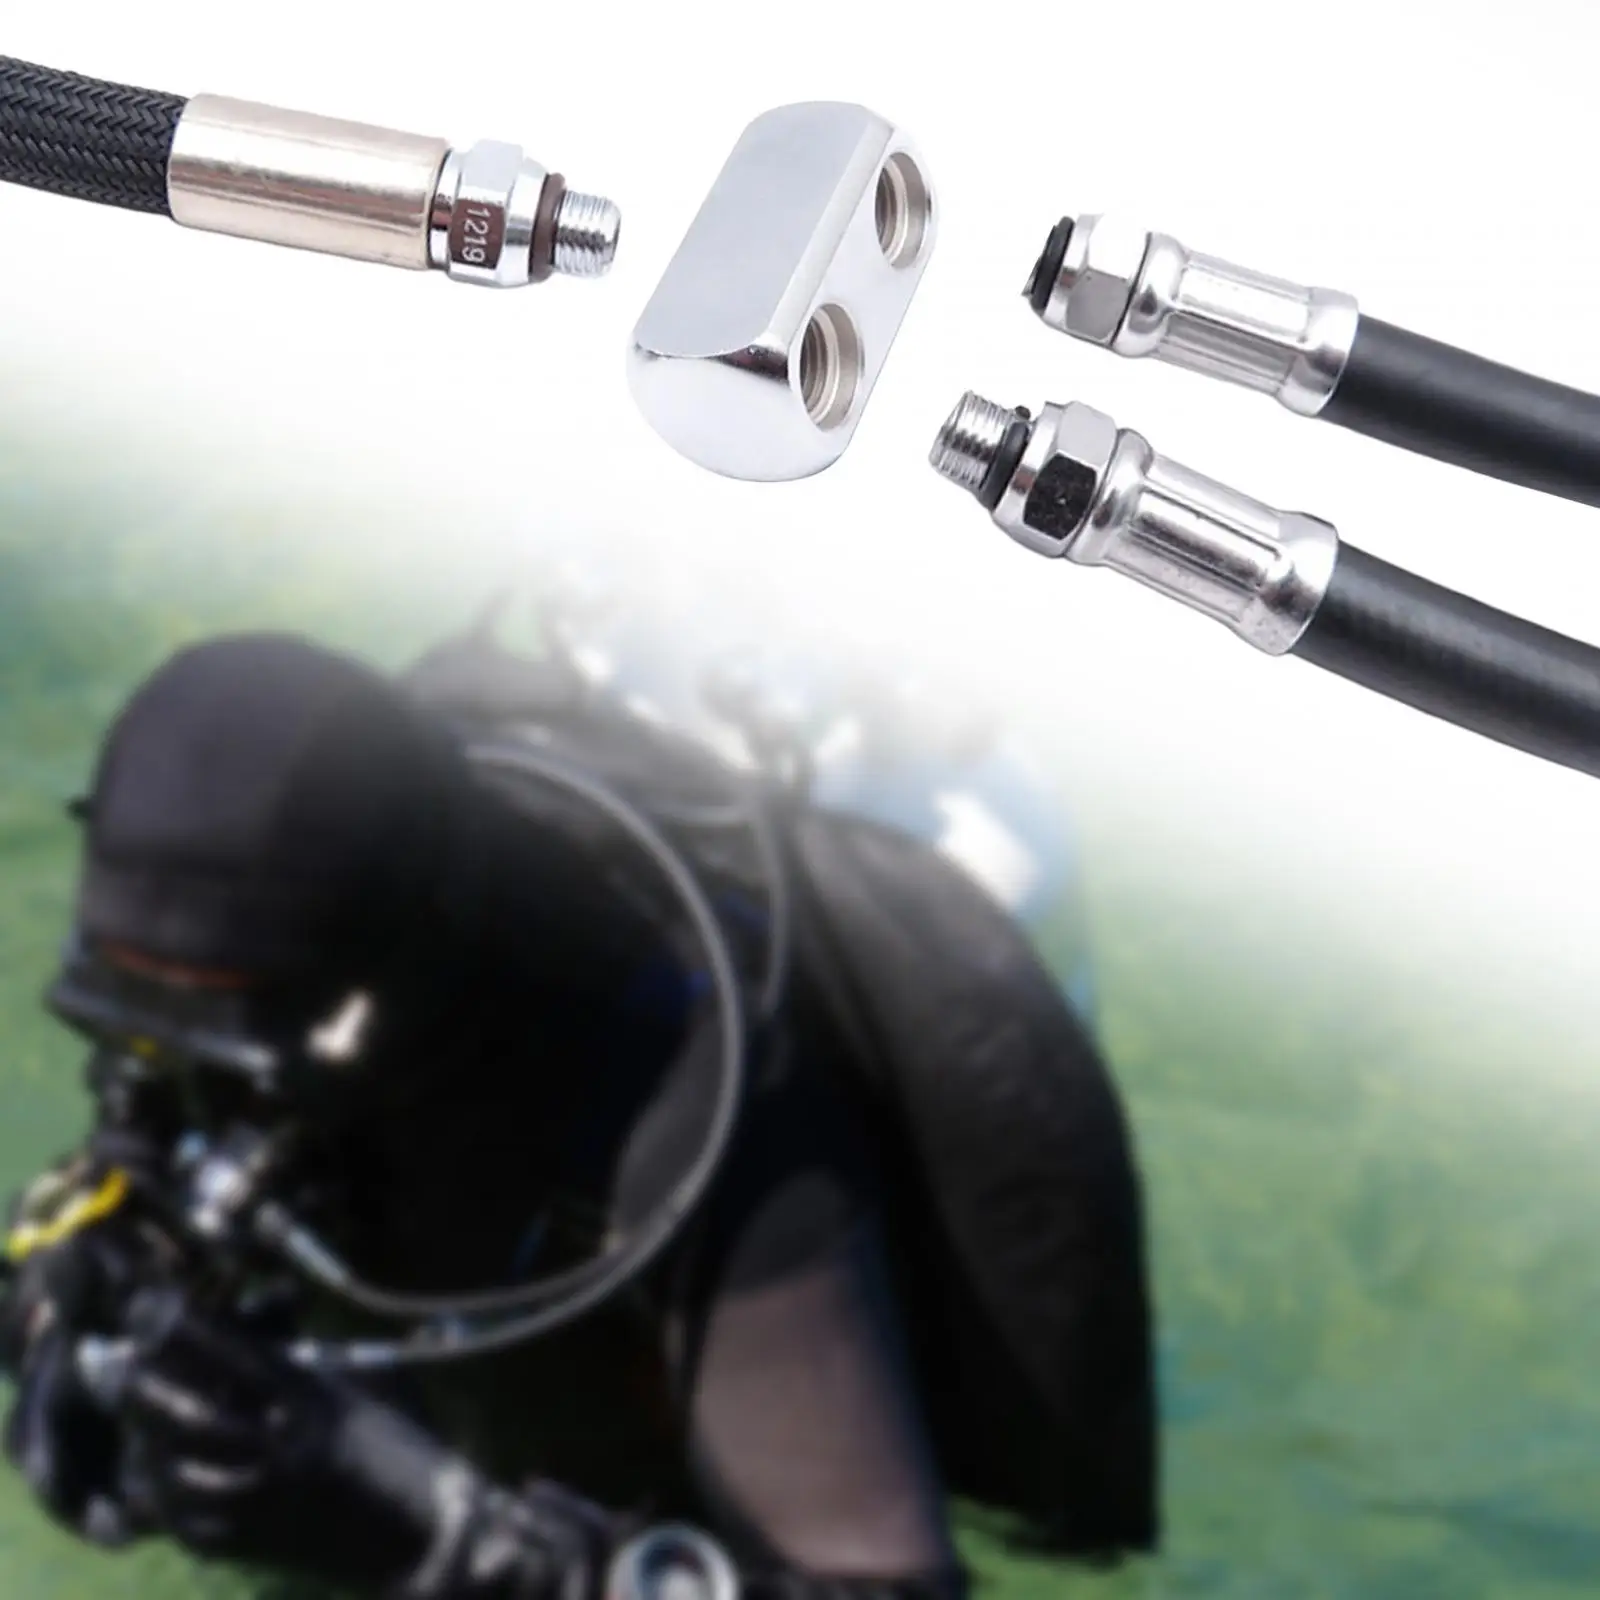 Scuba Diving Dive Regulator Adapter Water Sports Wear Resistant Brass Converter Dive Snorkeling Underwater Equipment Accessories